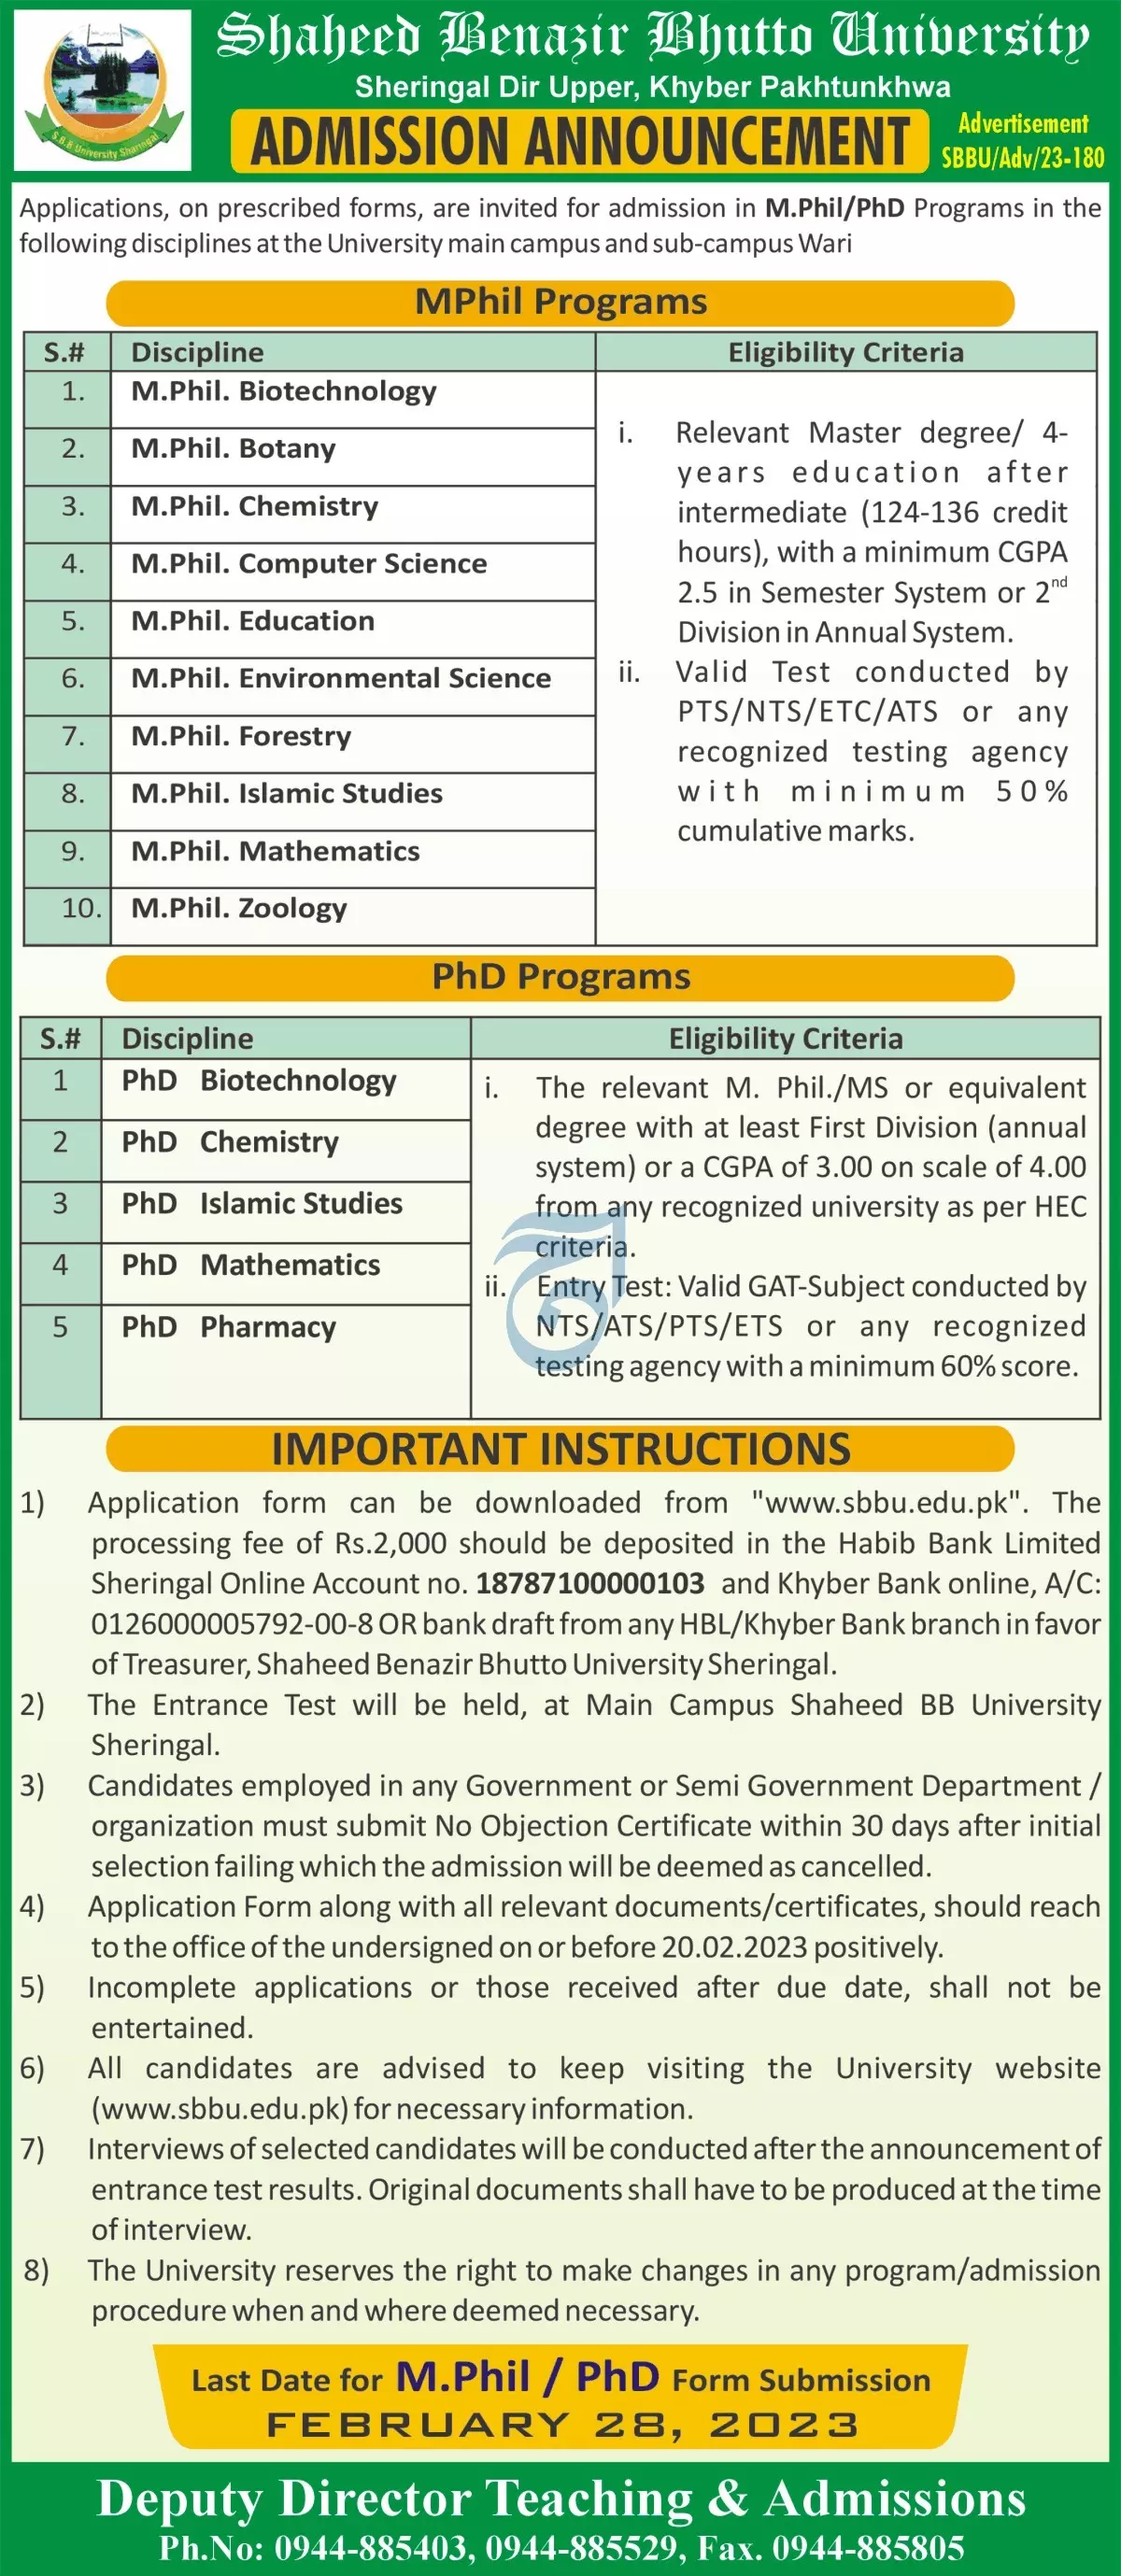 Shaheed Banazir Bhutto University Admissions 2023